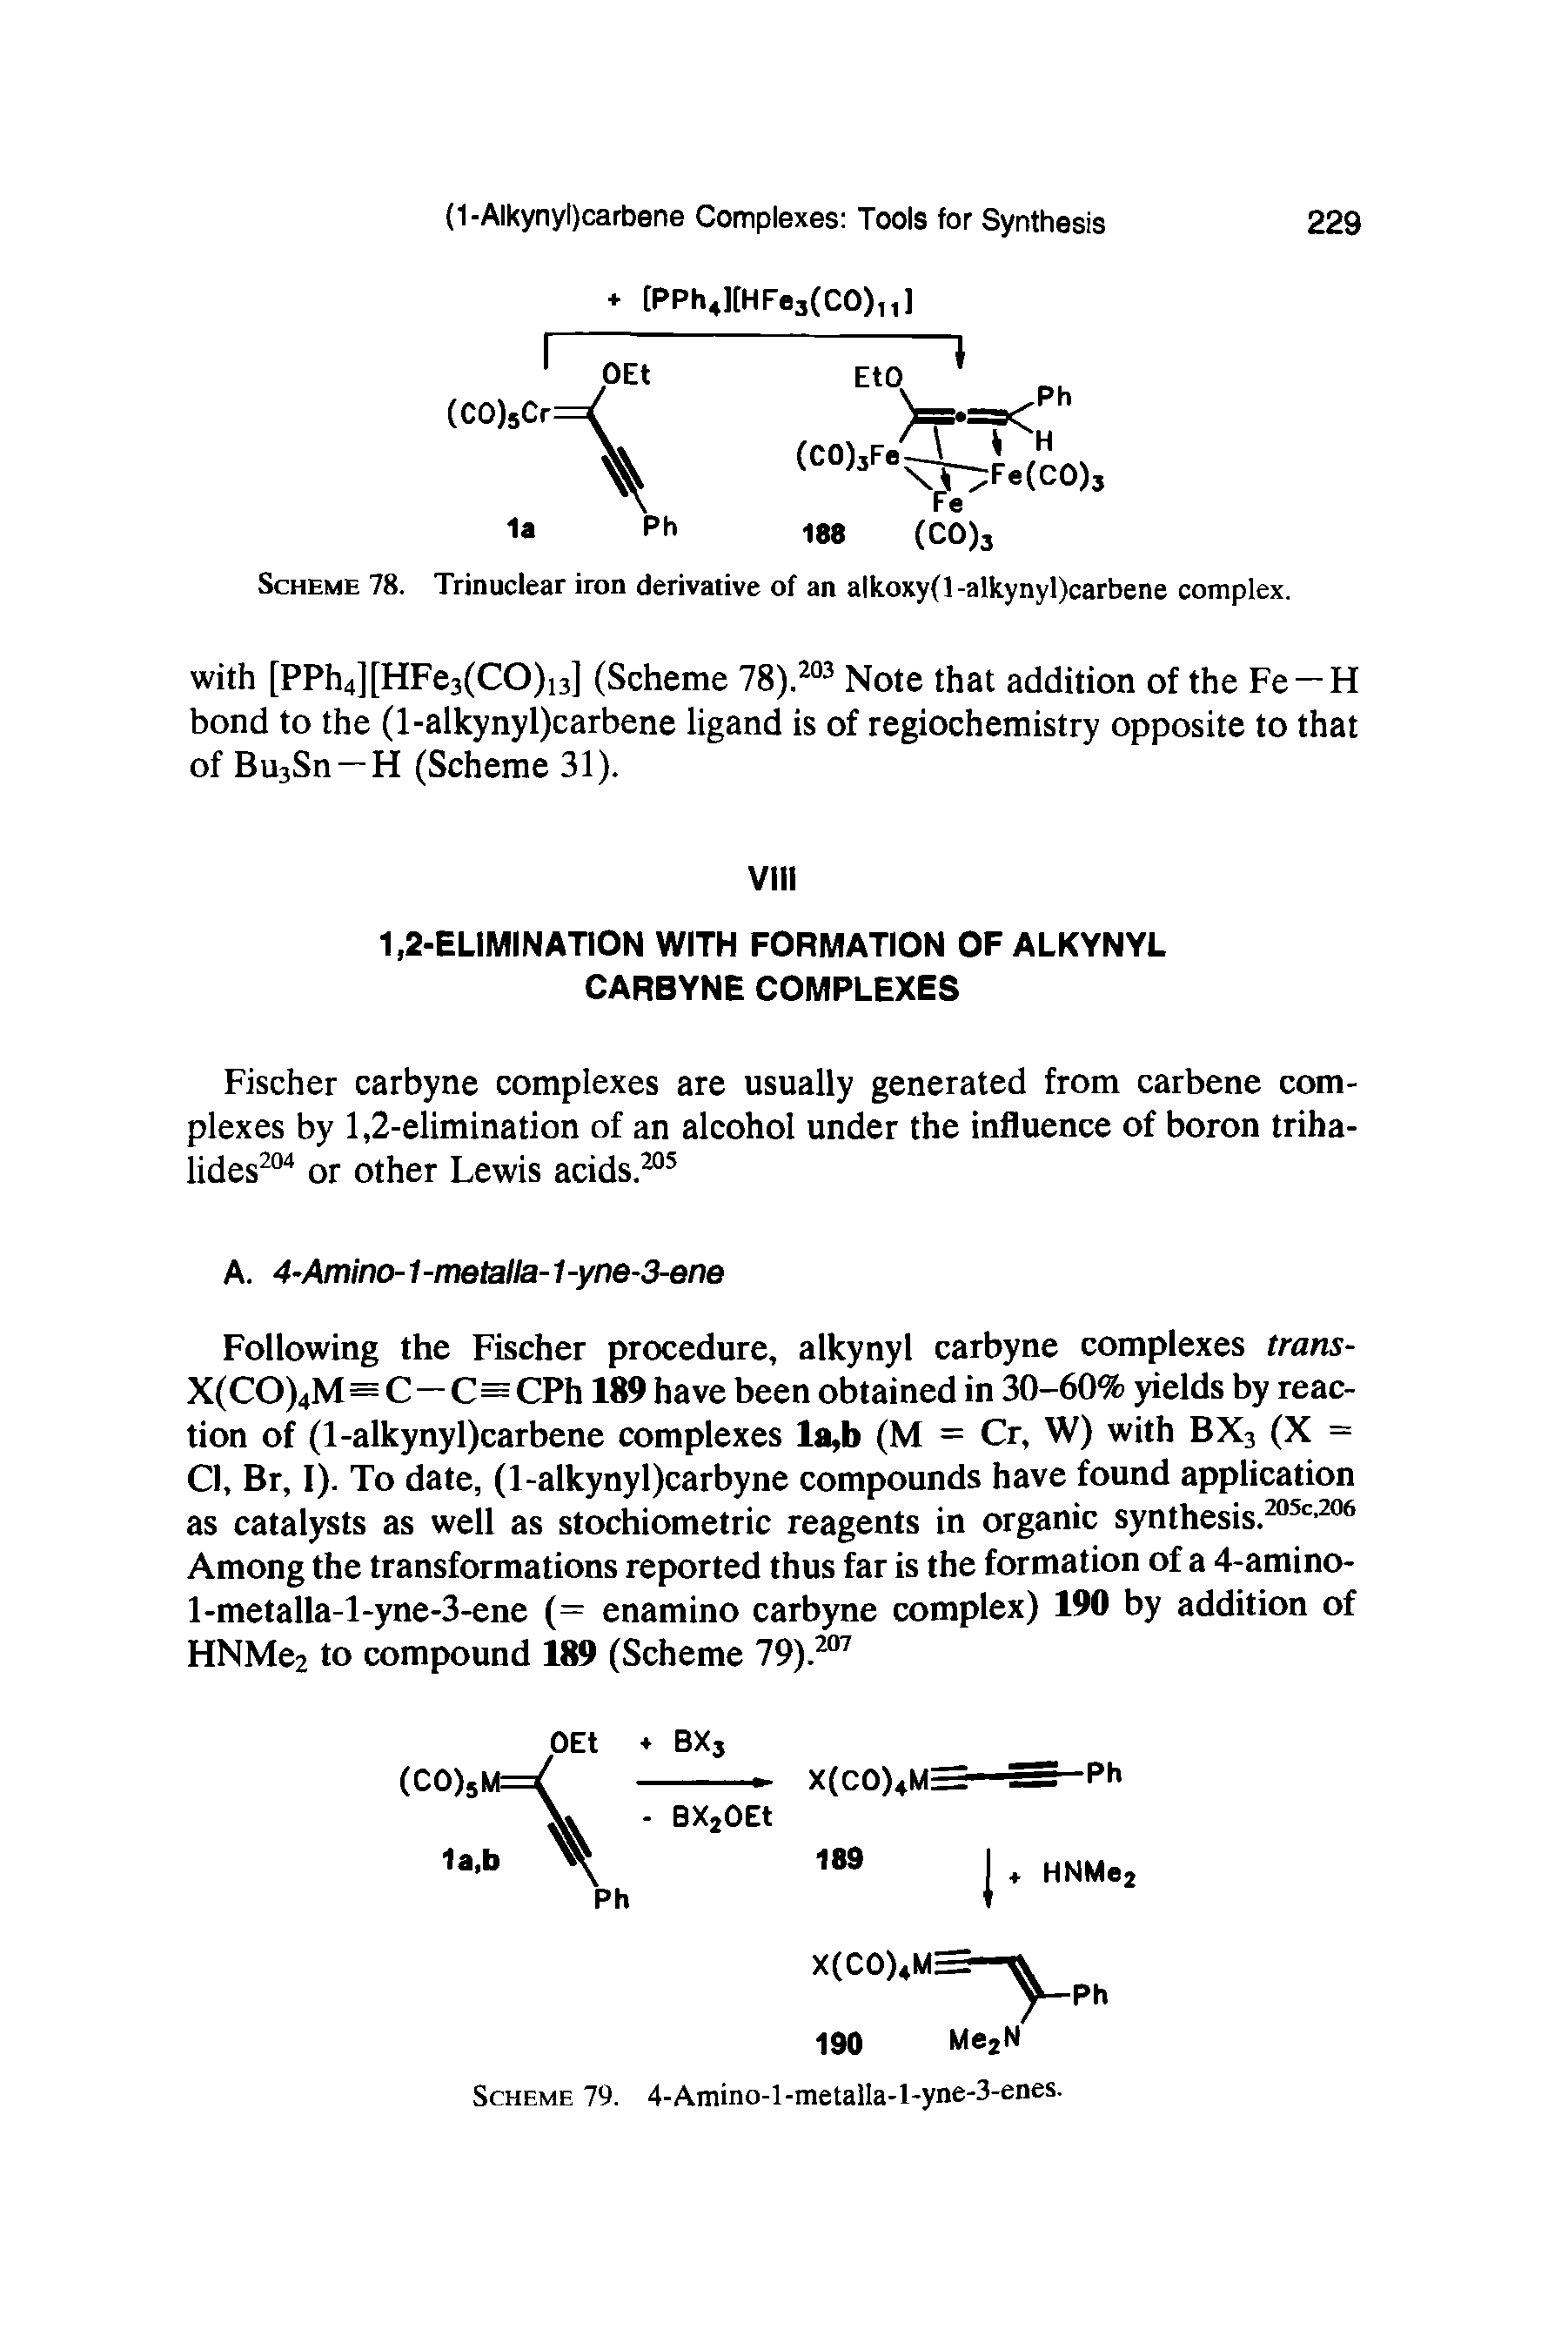 Scheme 78. Trinuclear iron derivative of an alkoxy(l-alkynyl)carbene complex.